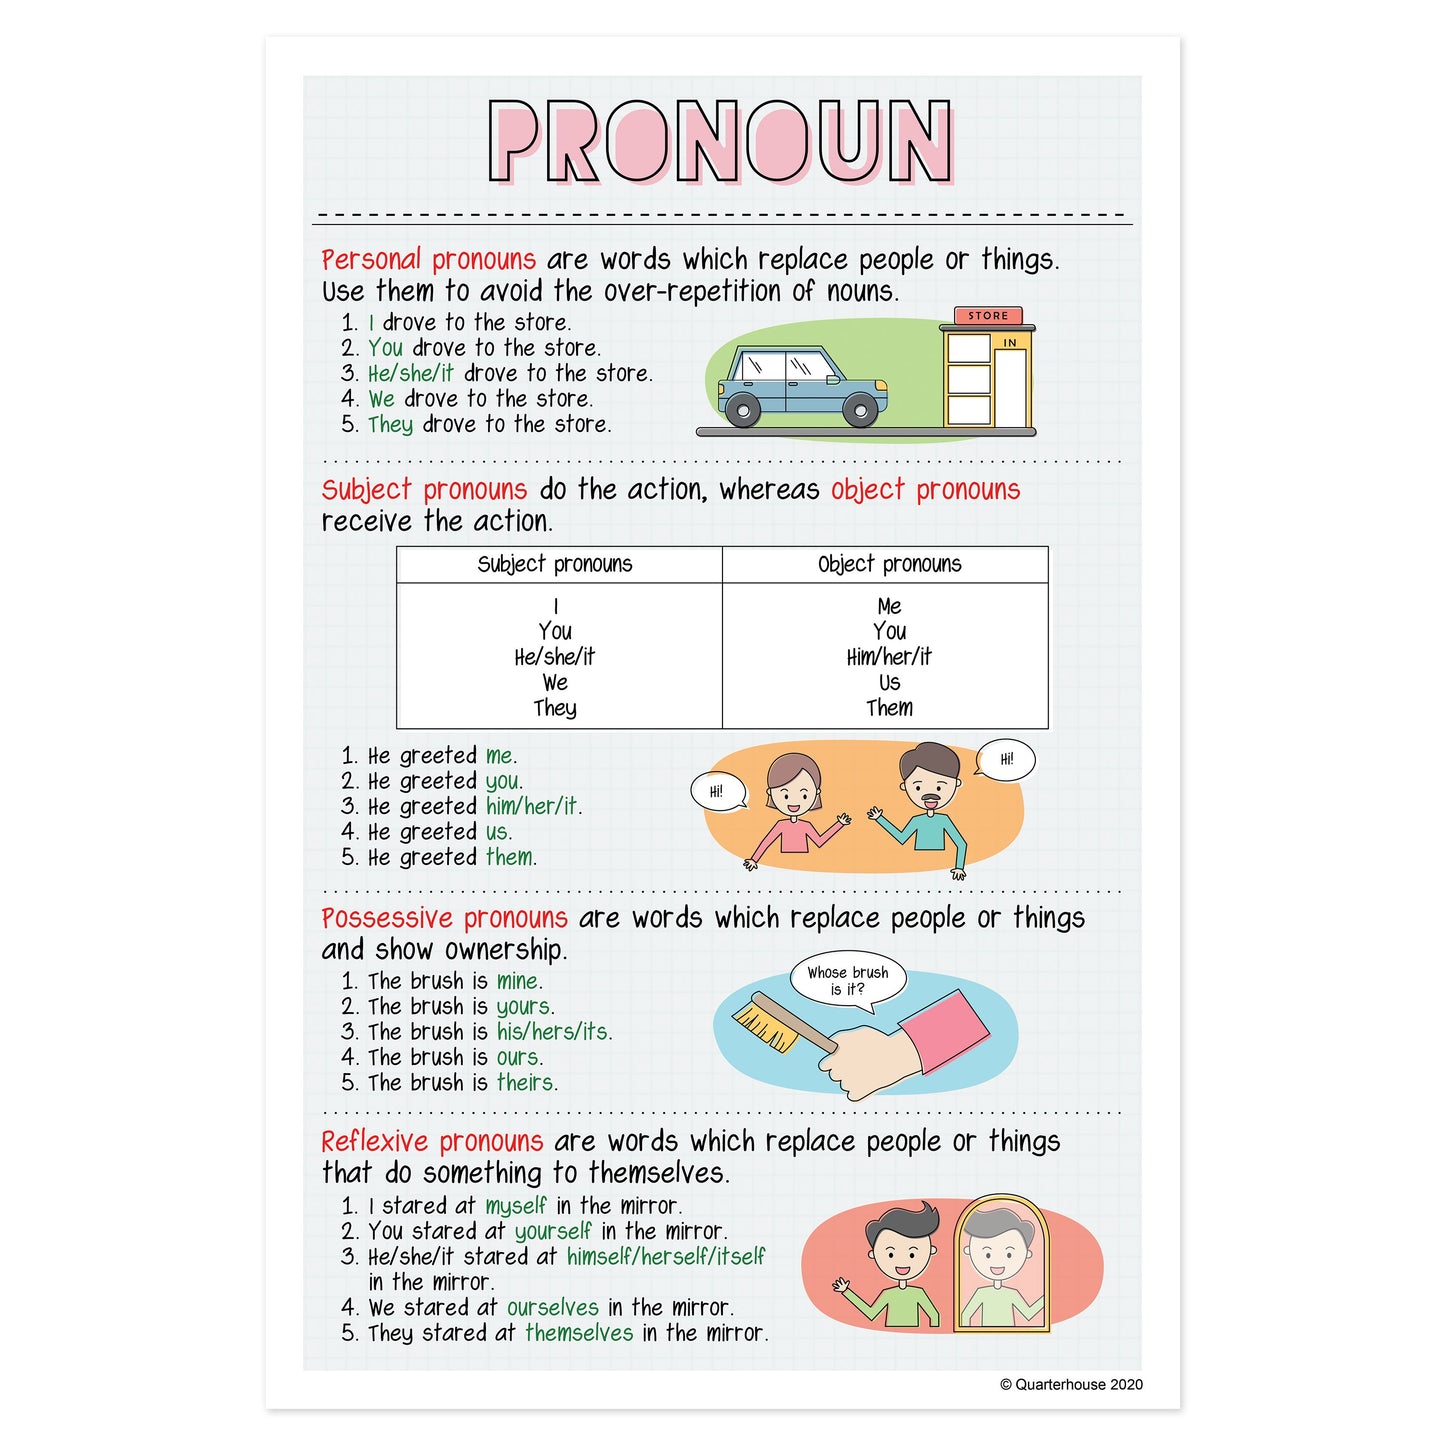 Quarterhouse Pronouns Poster, English-Language Arts Classroom Materials for Teachers